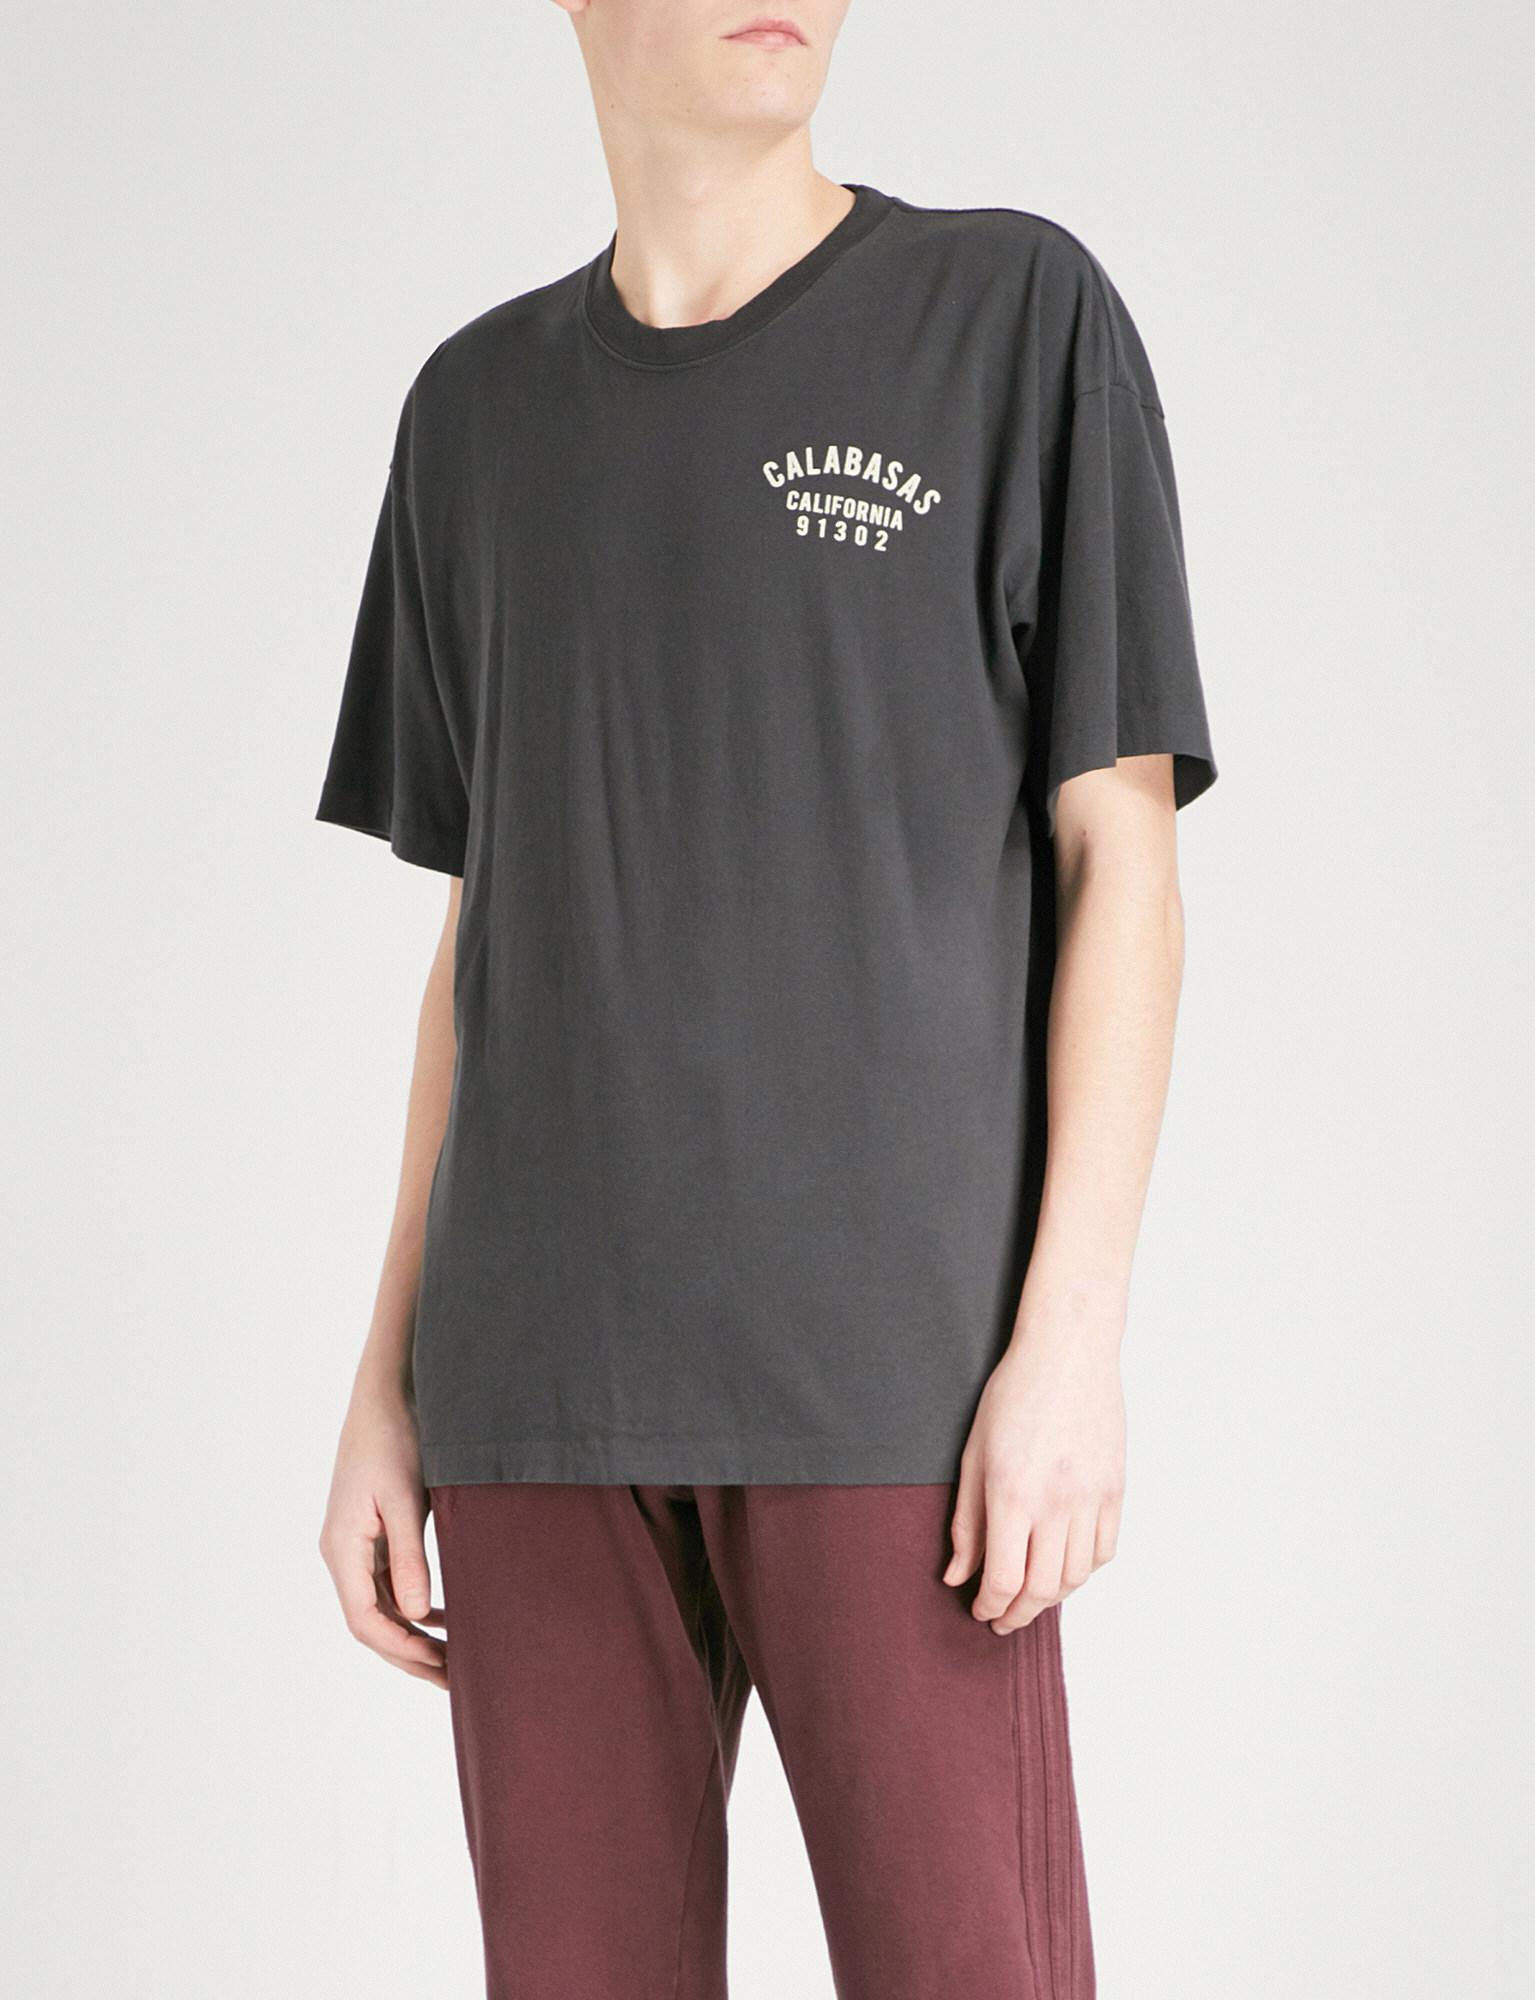 Yeezy Season 5 Calabasas Cotton-jersey T-shirt for Men | Lyst